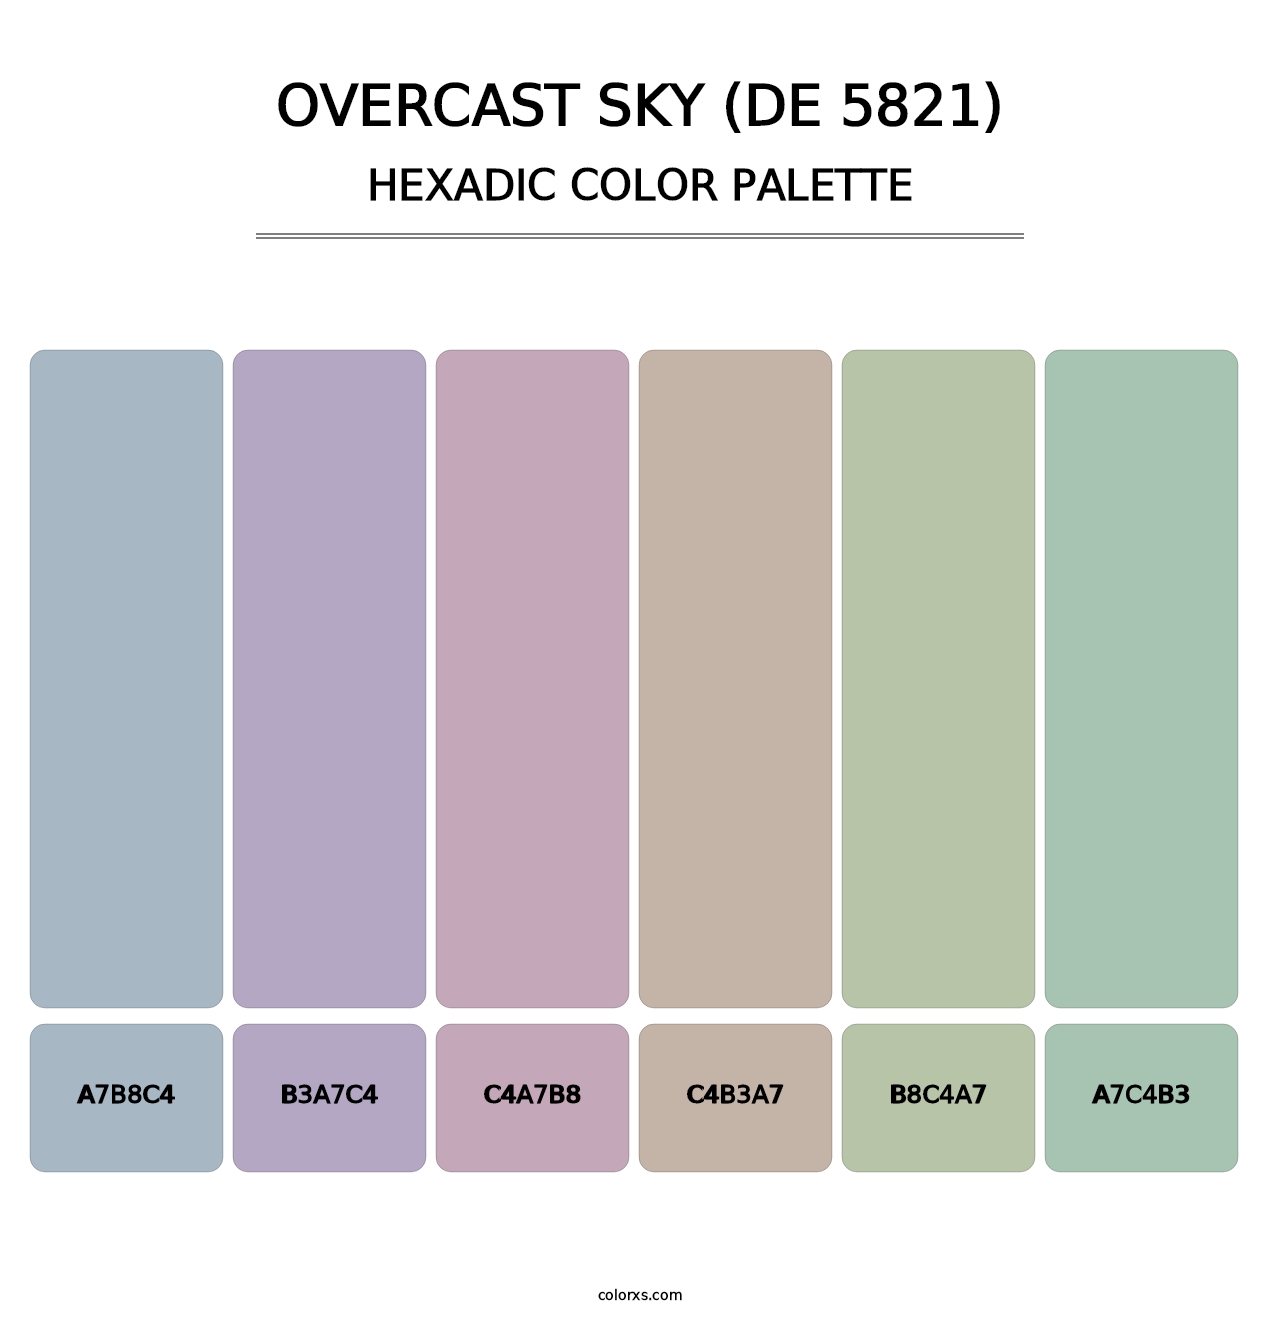 Overcast Sky (DE 5821) - Hexadic Color Palette